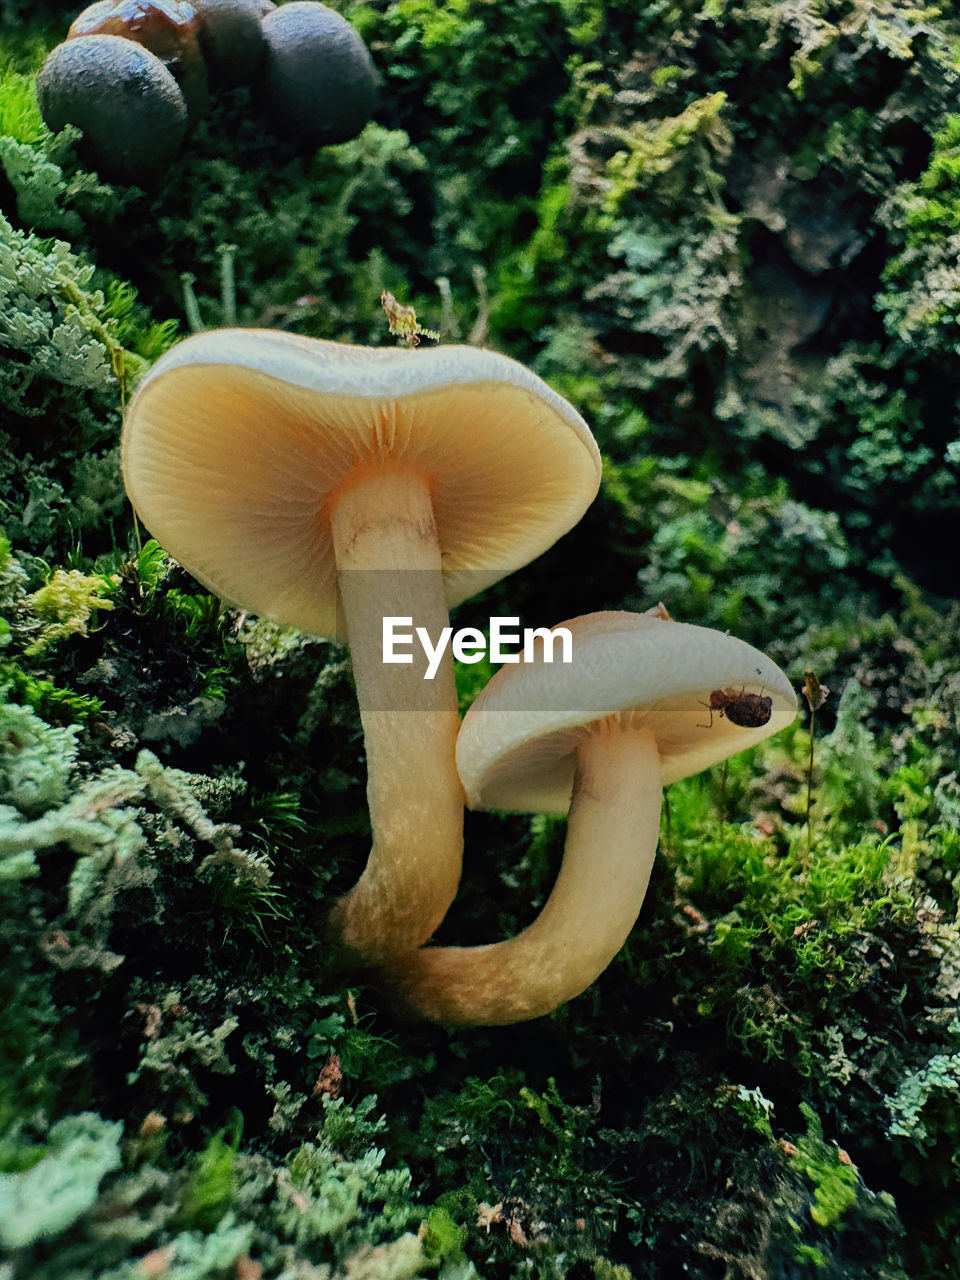 close-up of mushrooms growing on tree